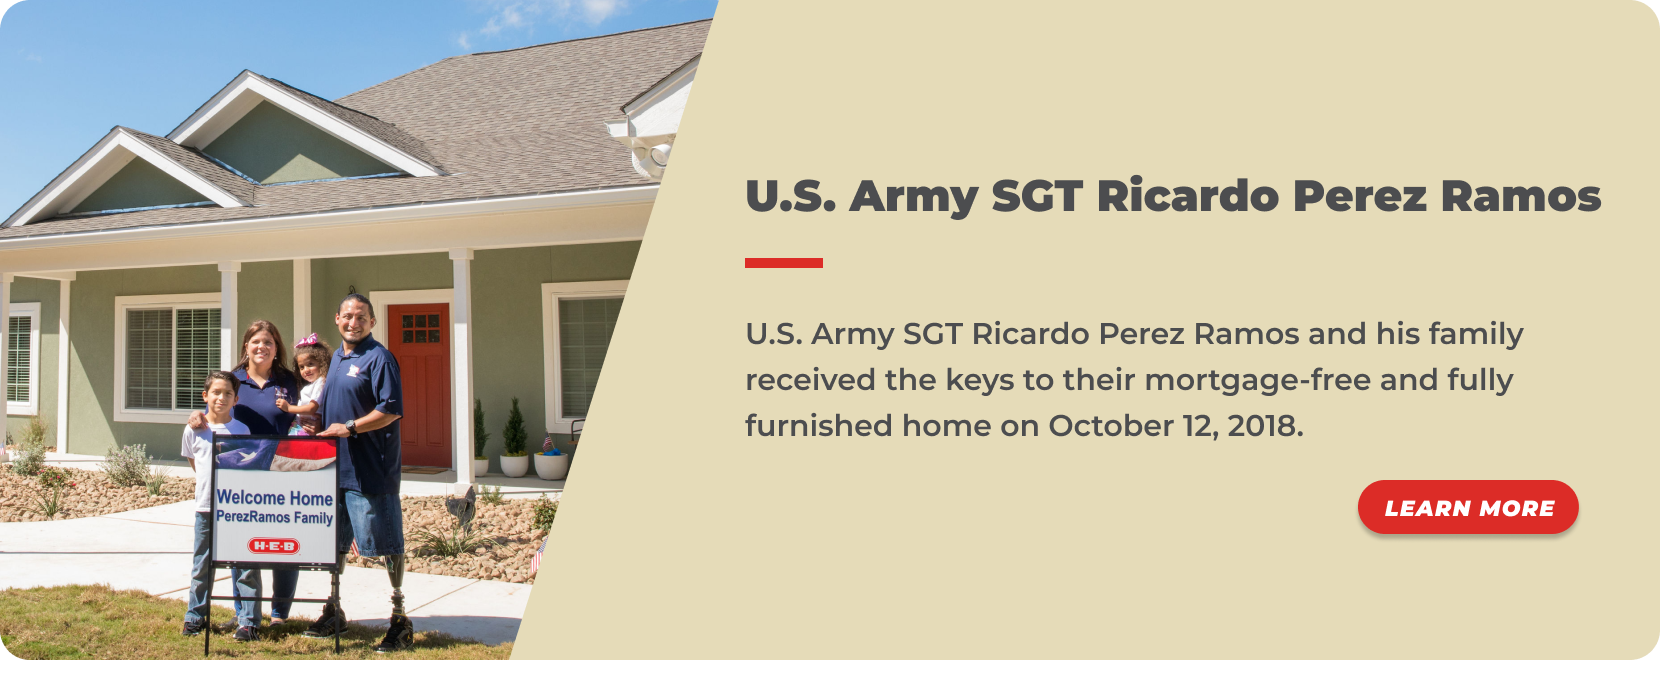 22 -U.S. Army SGT Ricardo Perez Ramos